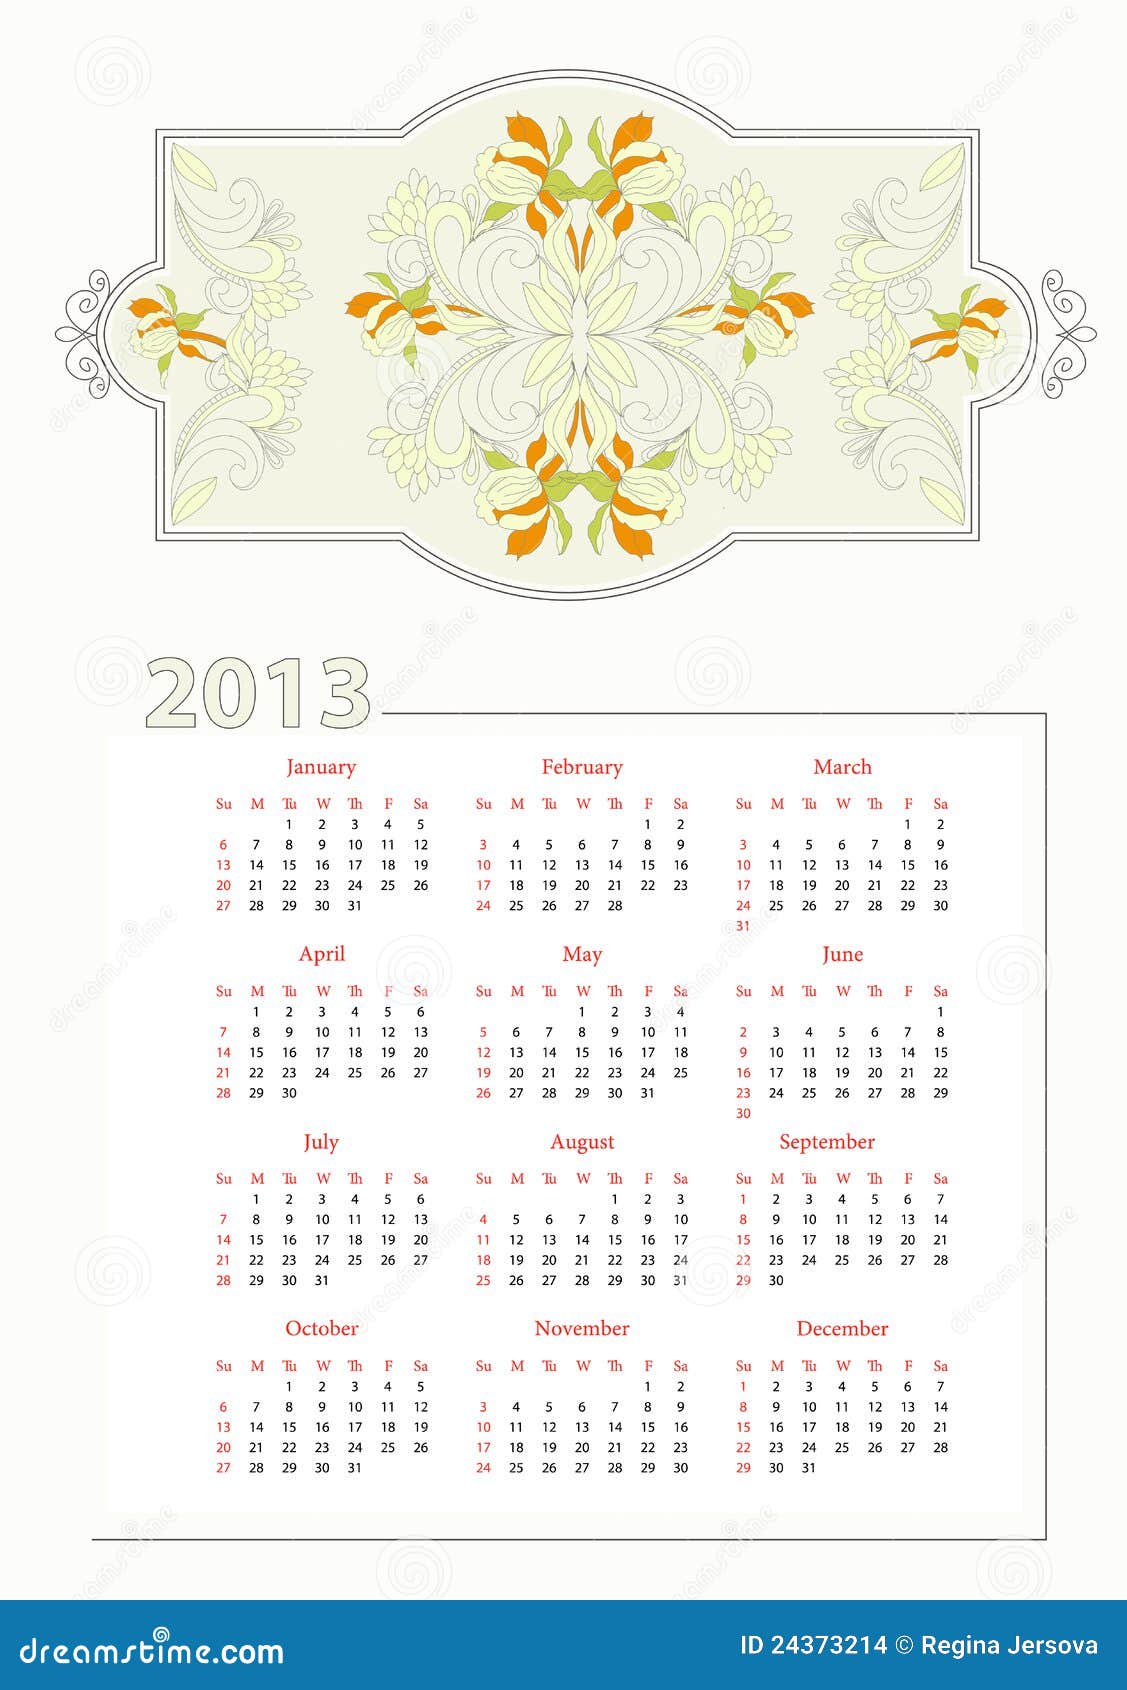 Template for Decorative Calendar Stock Vector Illustration of flowers